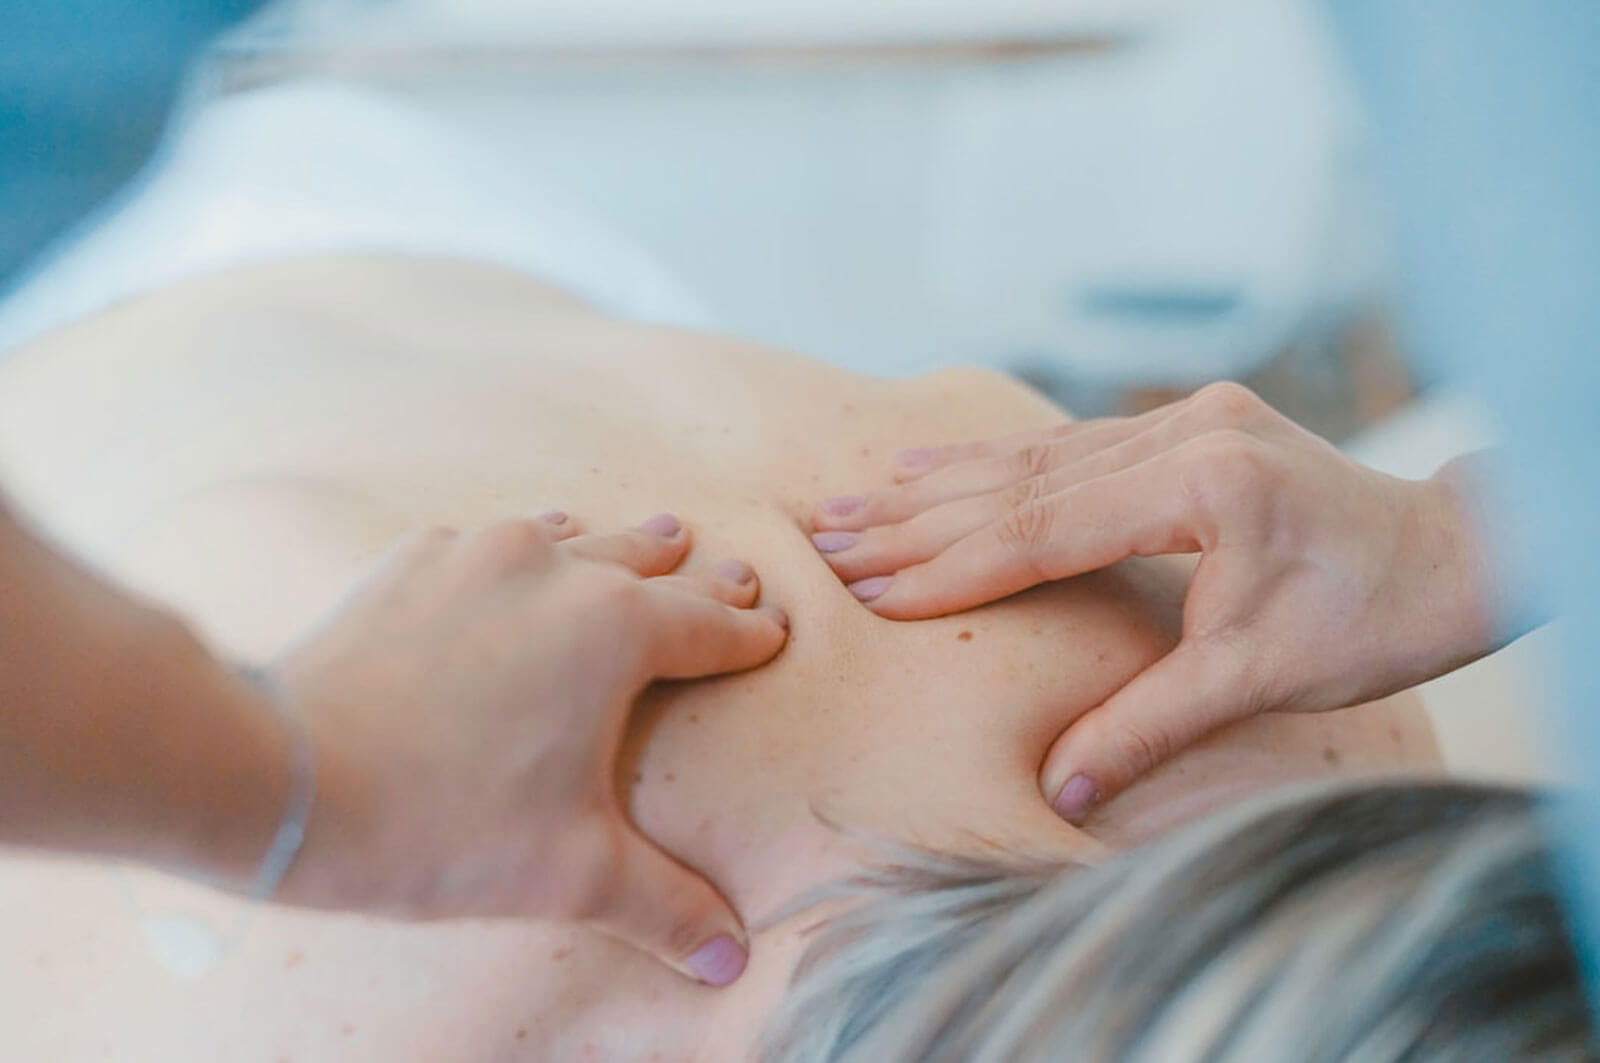 Classical Swedish massage